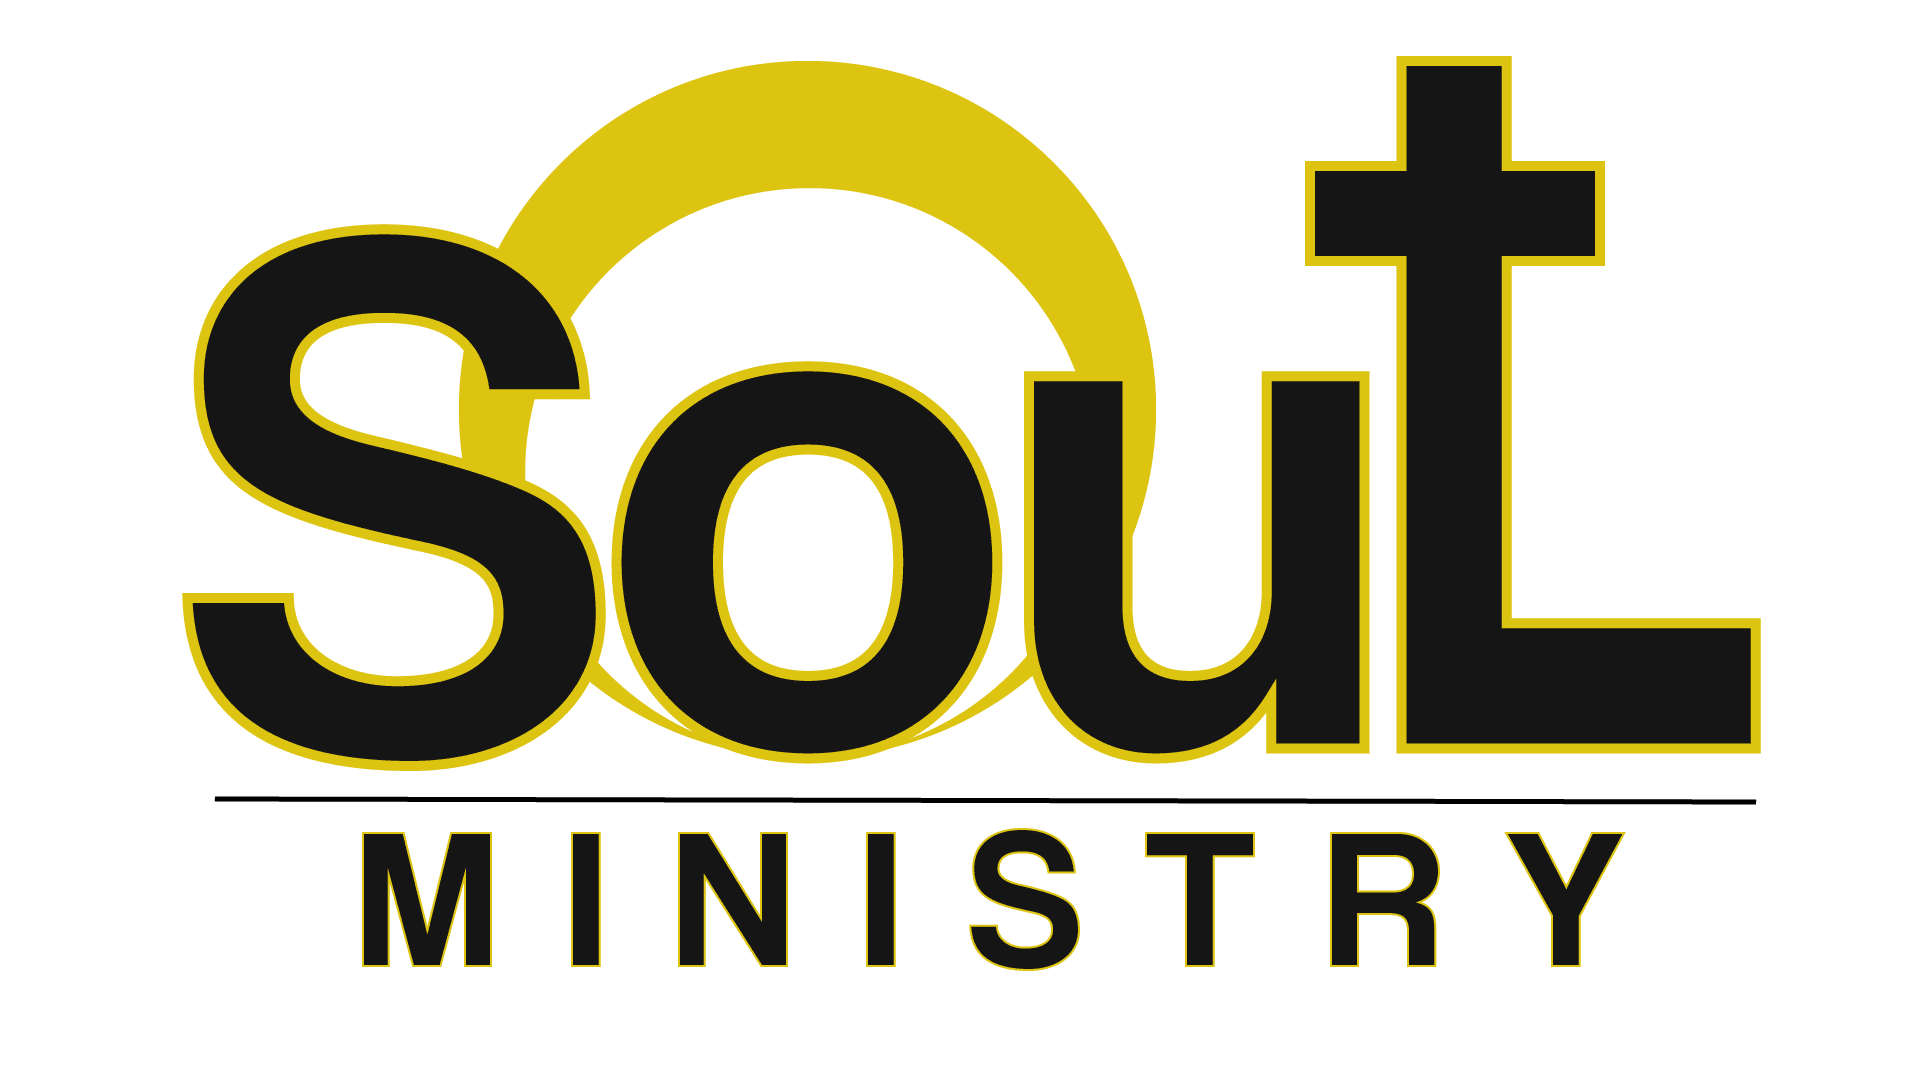 Soul Ministry